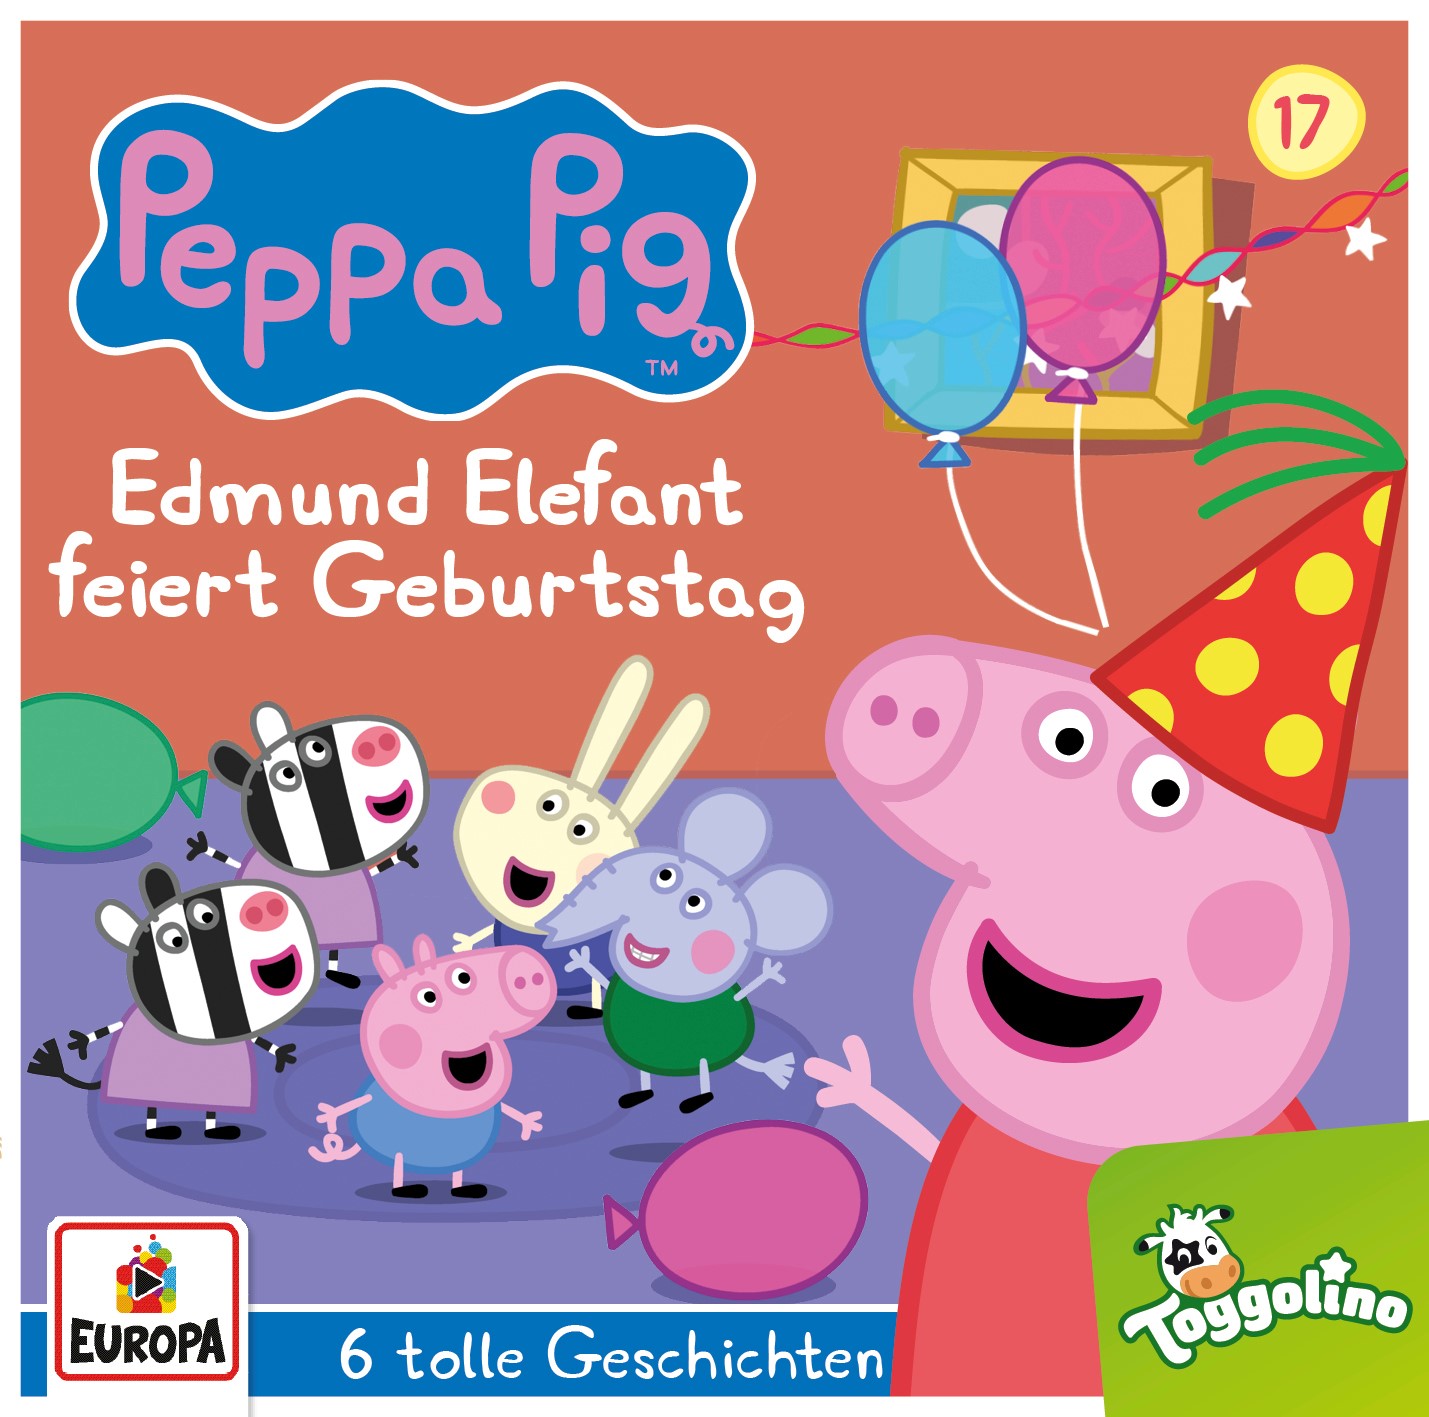 Peppa Pig Hörspiele: Edmund Elefant feiert Geburtstag